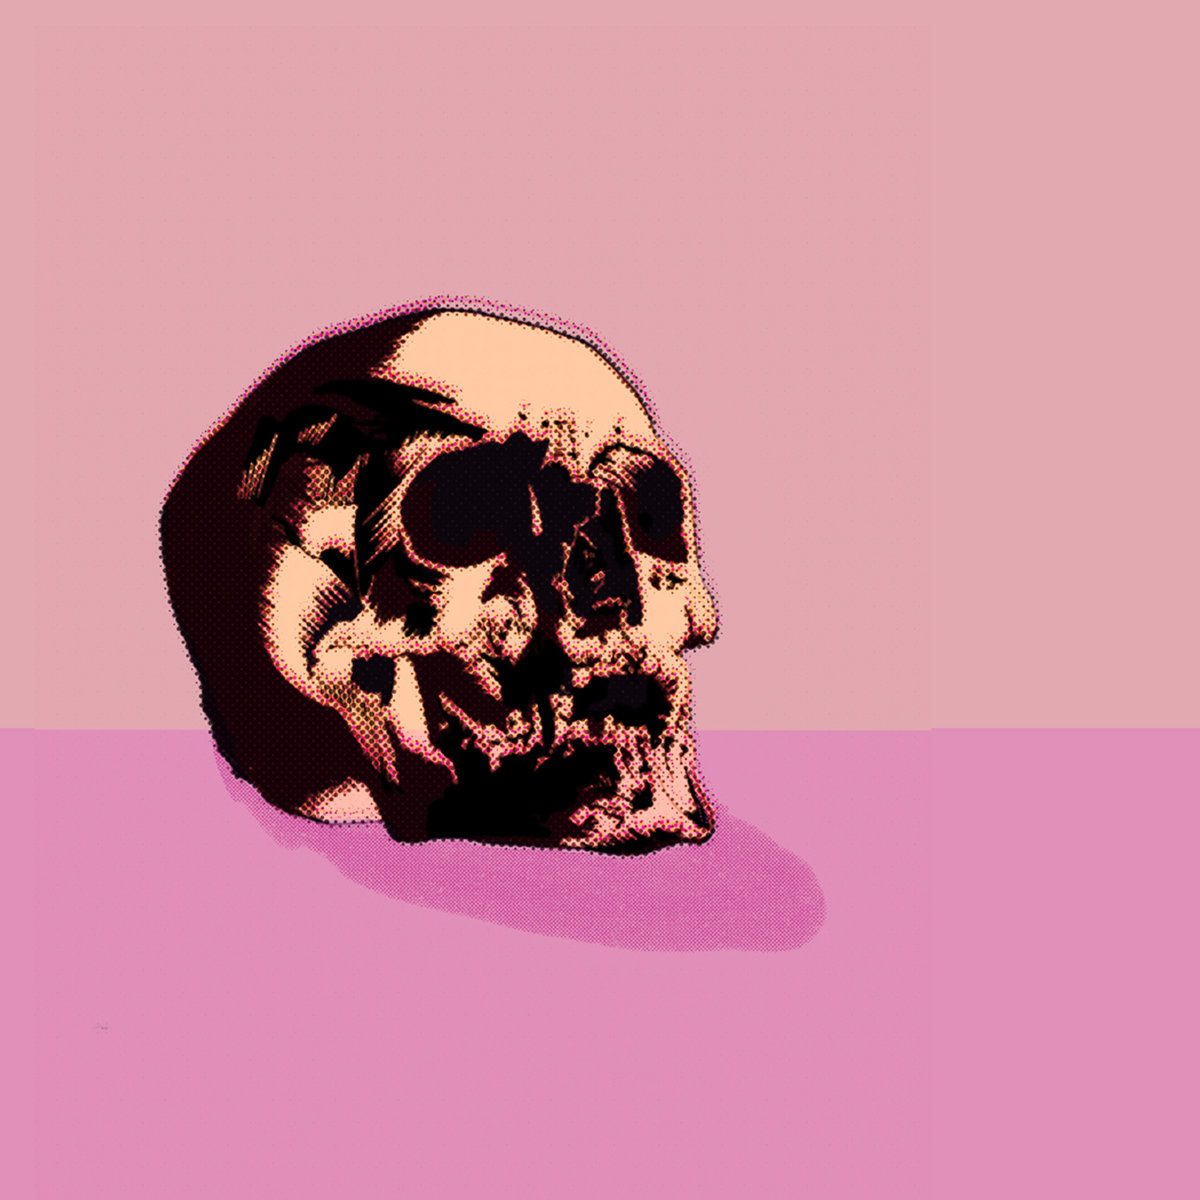 megadead tragedy doom and so on album art - illustration of a skull on a pink background